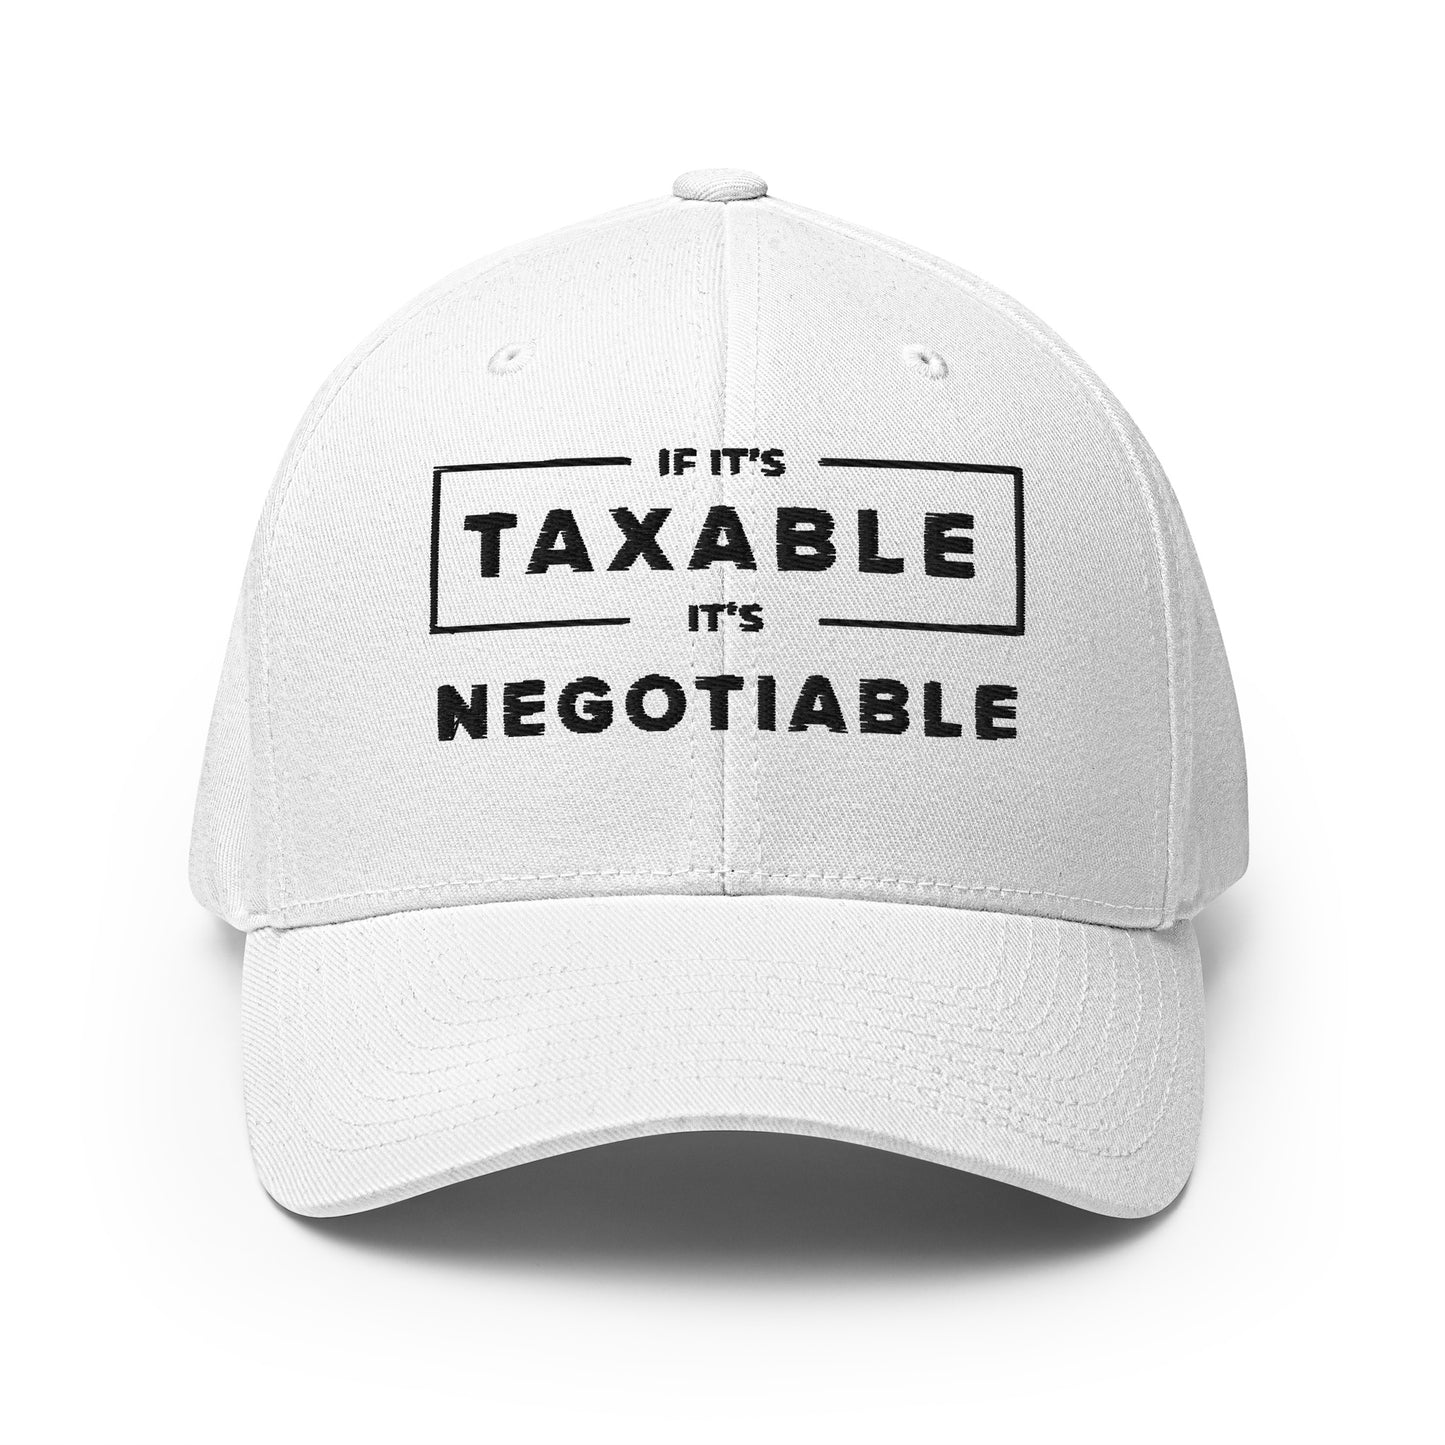 If it's taxable, it's negotiable hat - original - dark